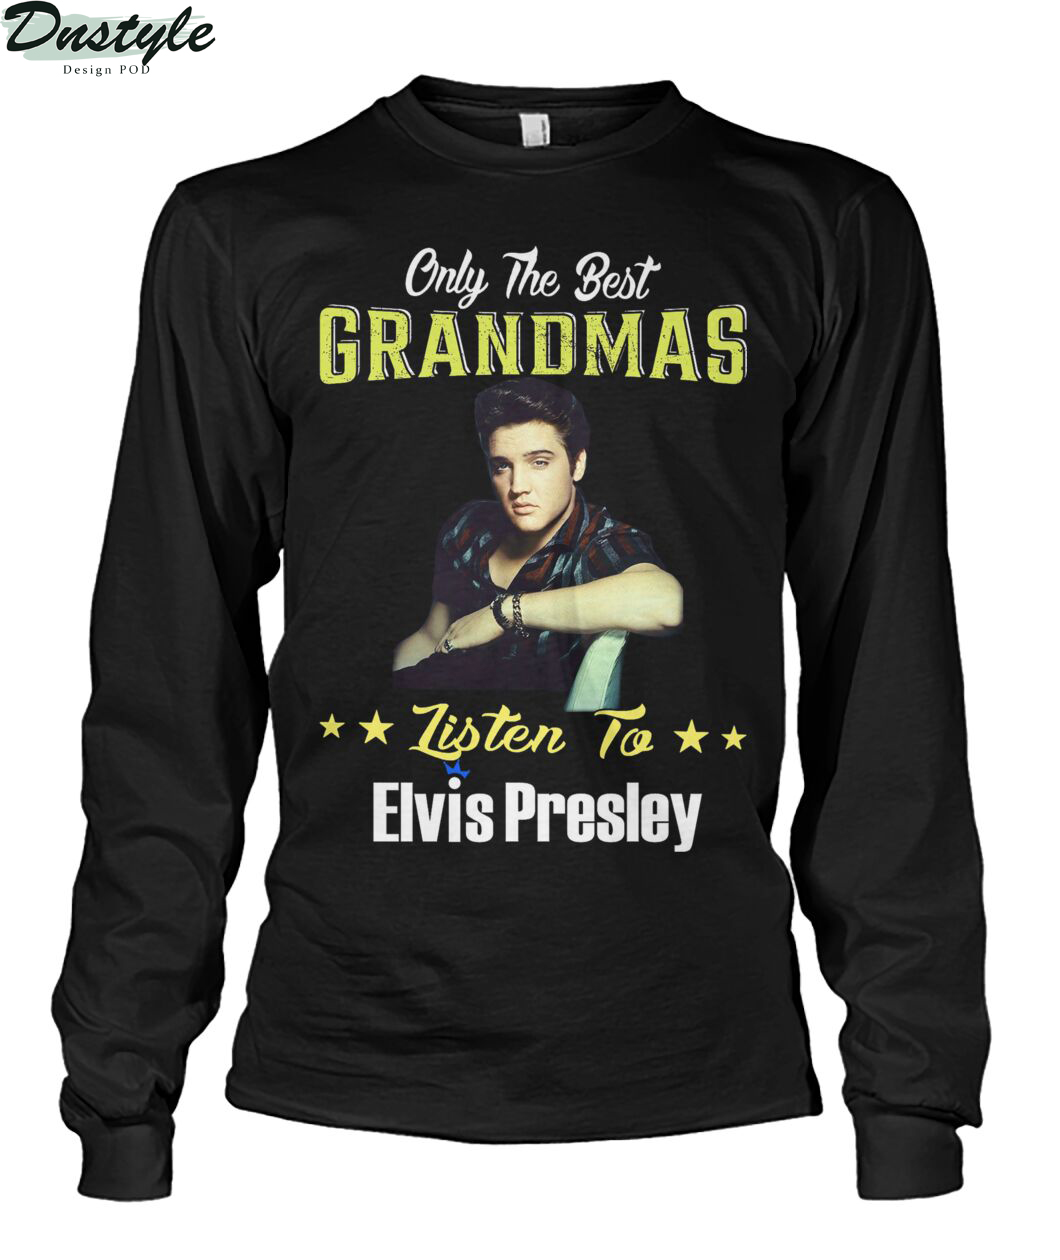 Only the best grandmas listen to elvis presley long sleeve